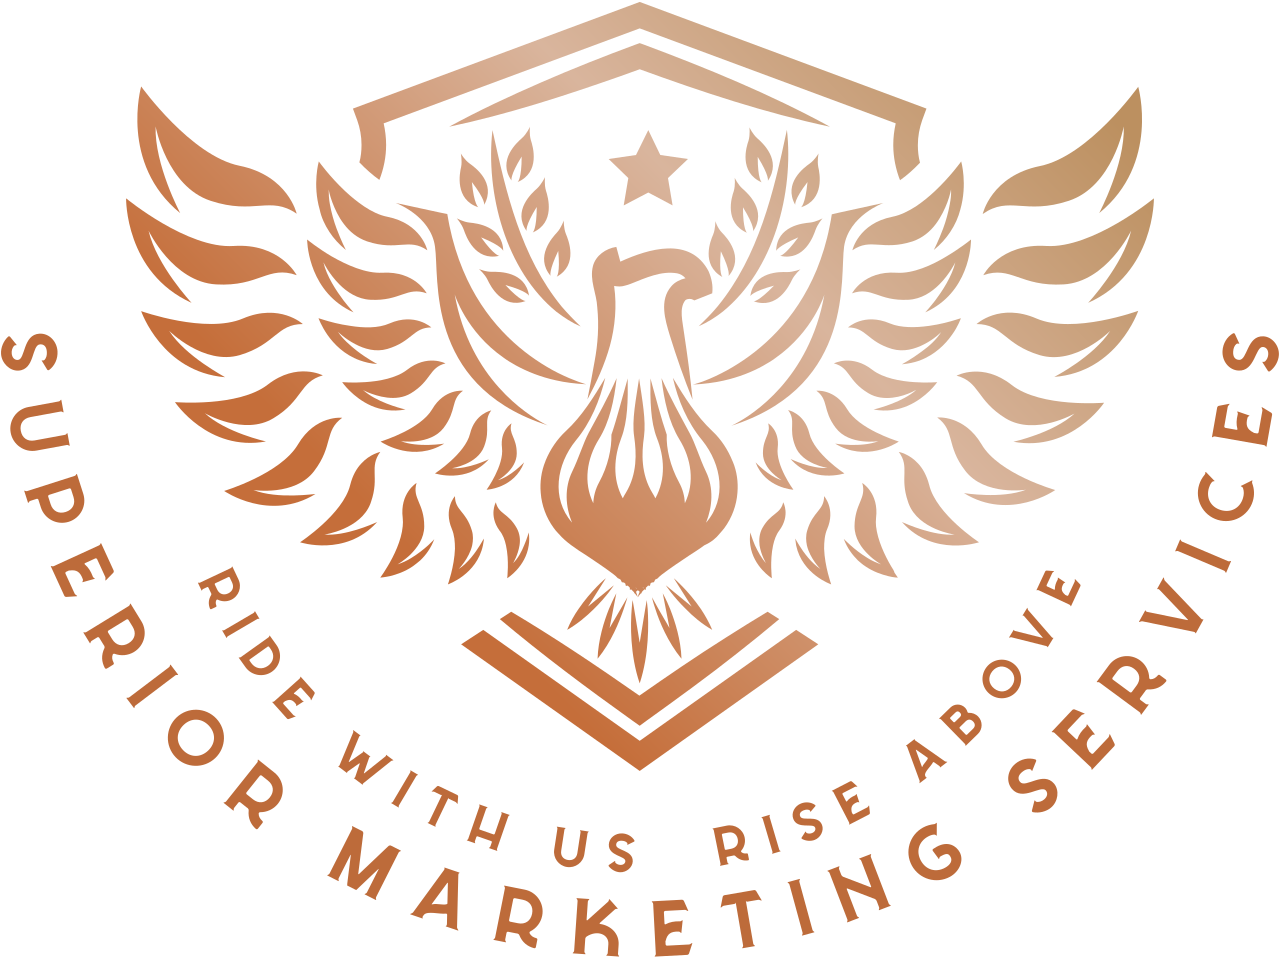 Superior Marketing Services's logo